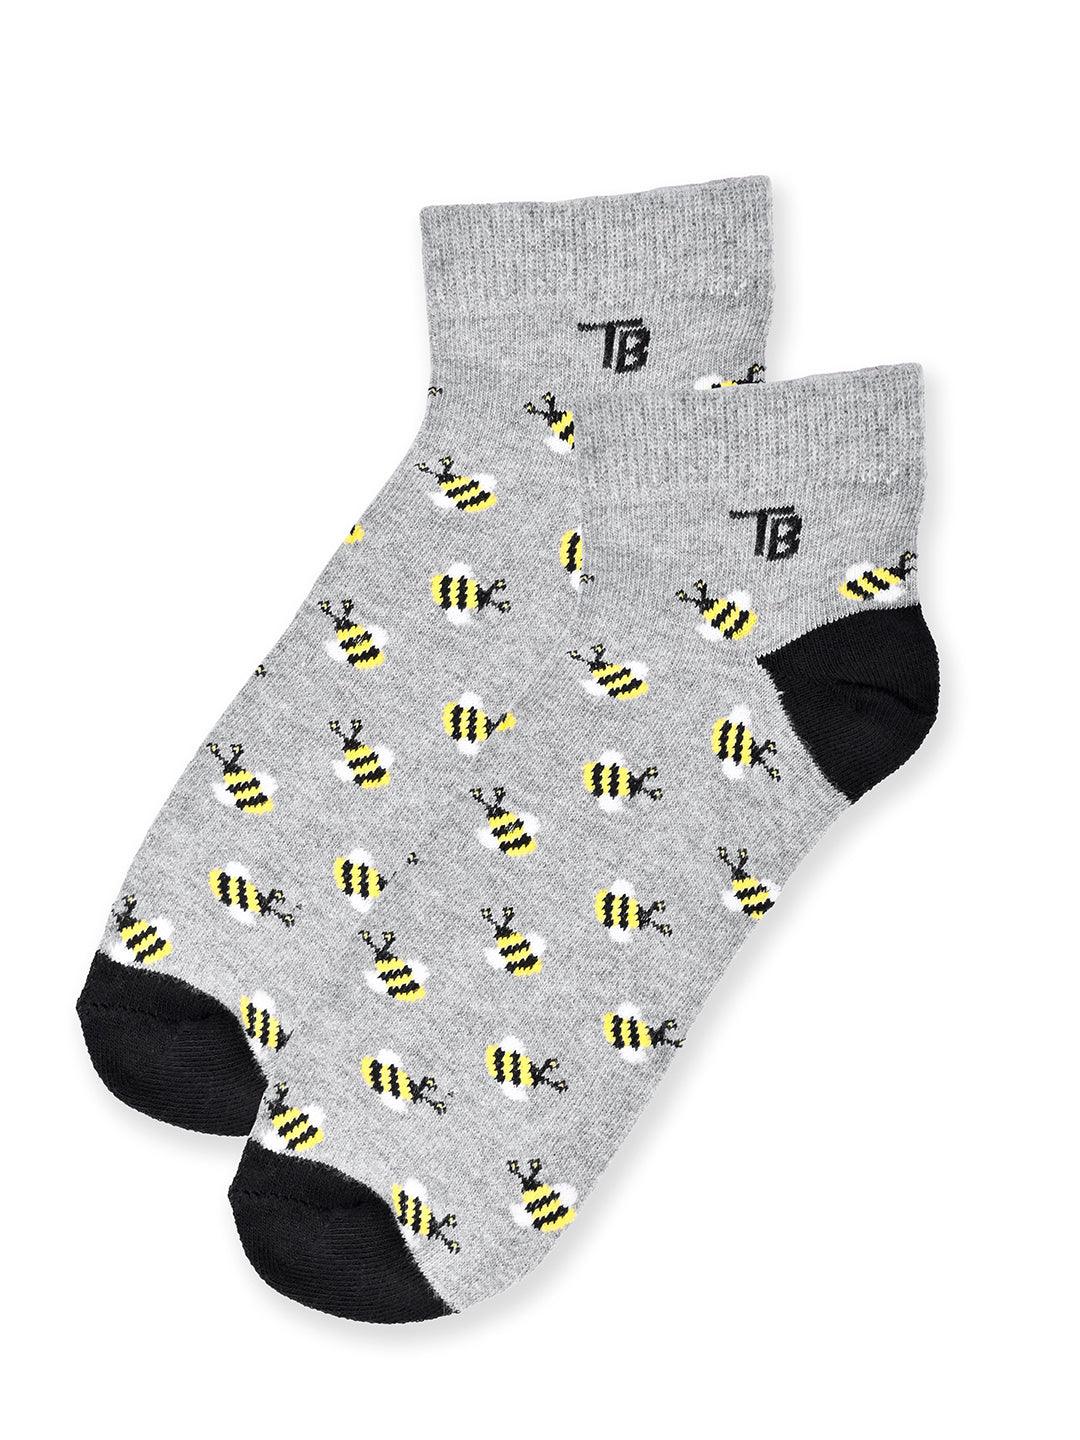 printed grey socks